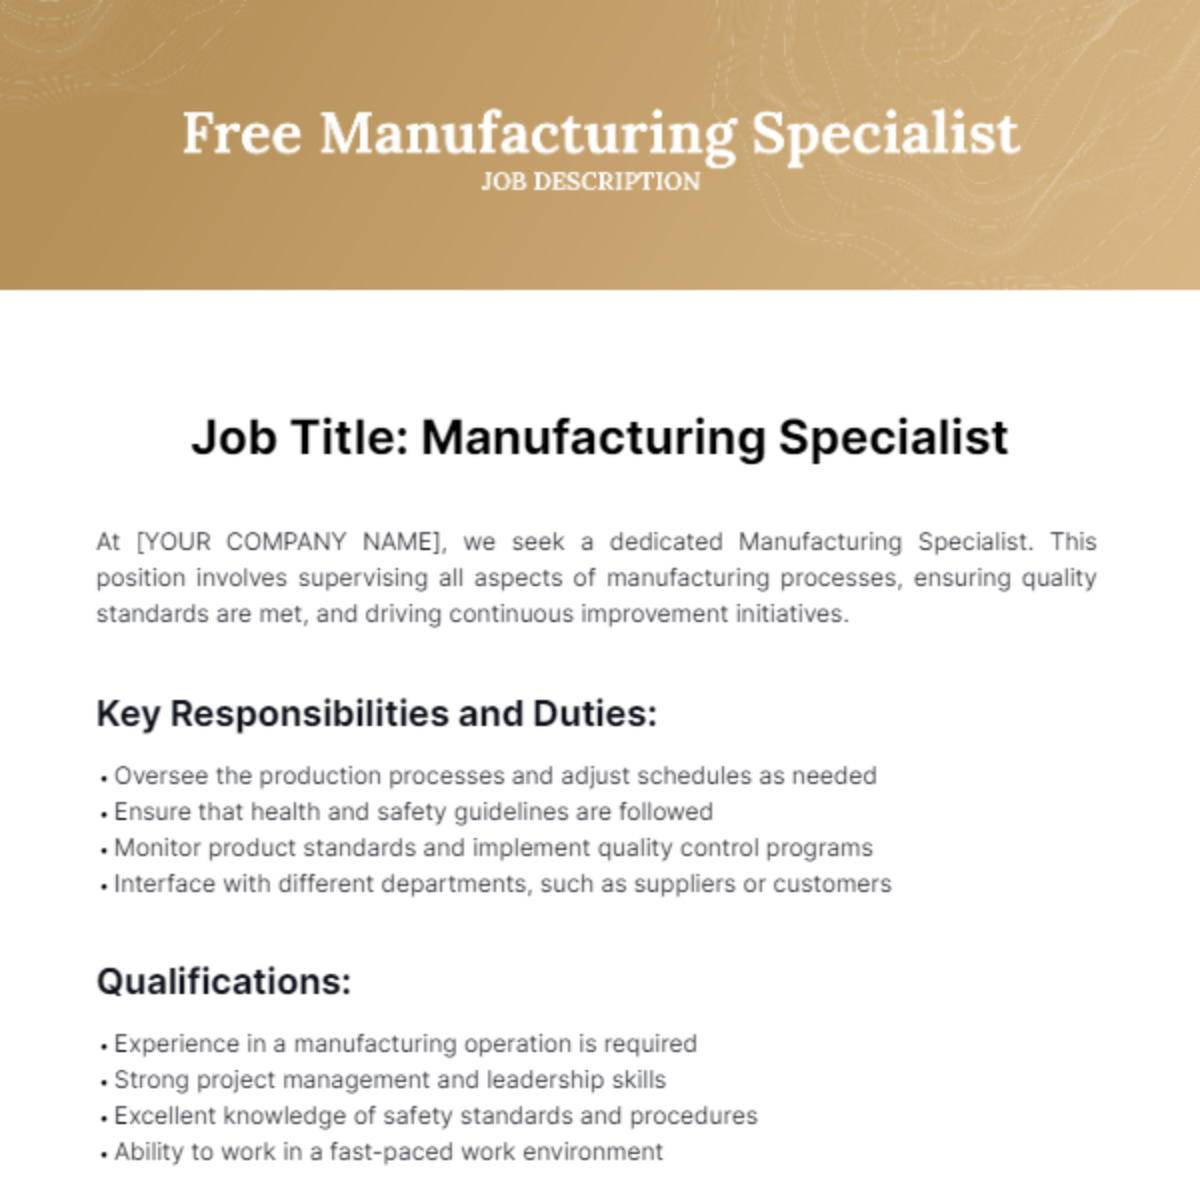 Free Manufacturing Job Description Template